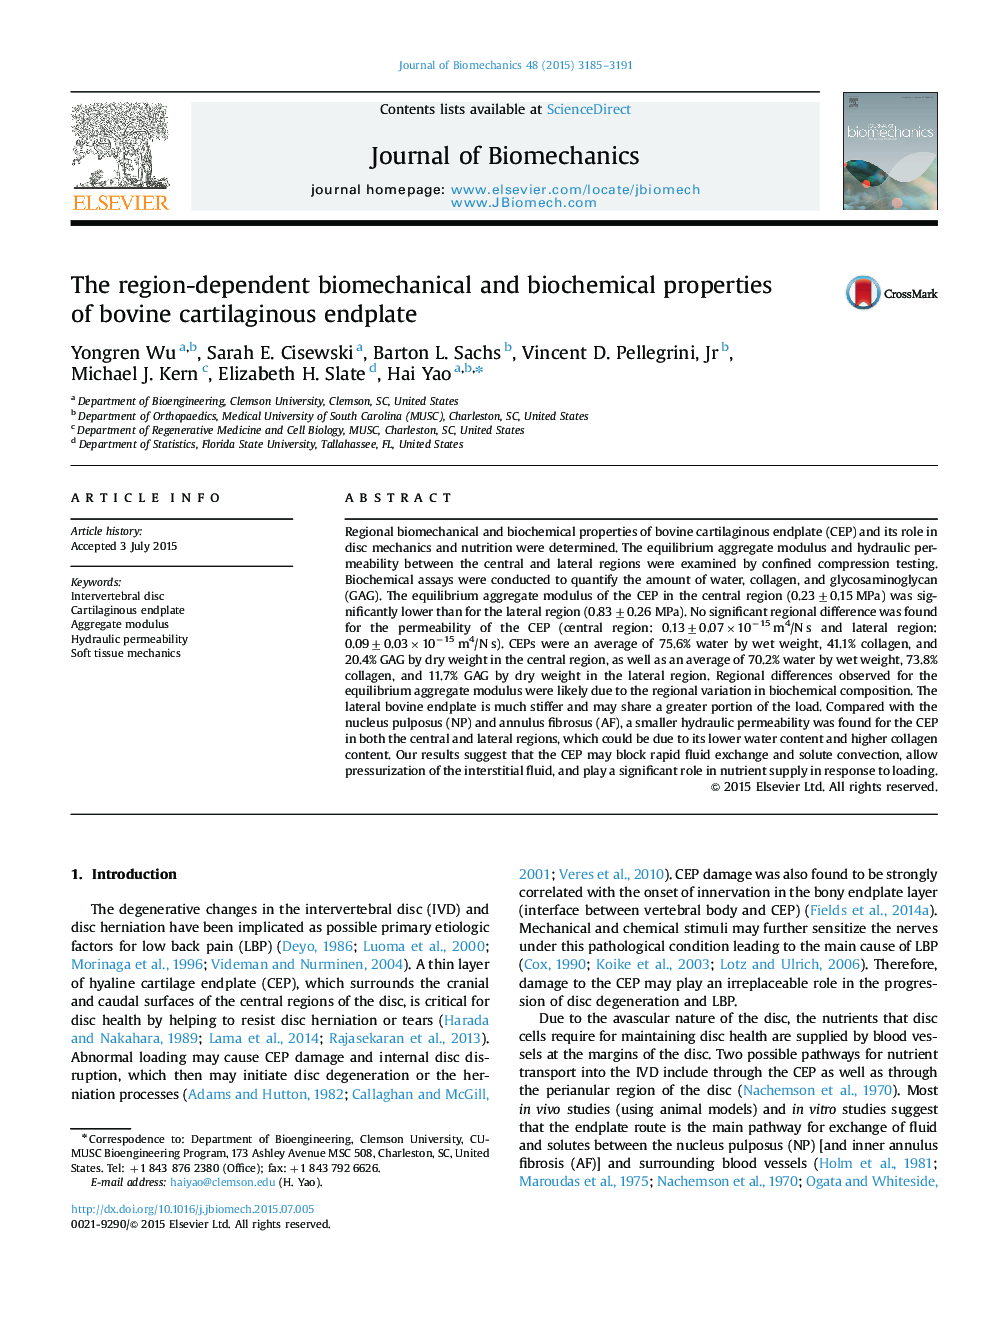 The region-dependent biomechanical and biochemical properties of bovine cartilaginous endplate